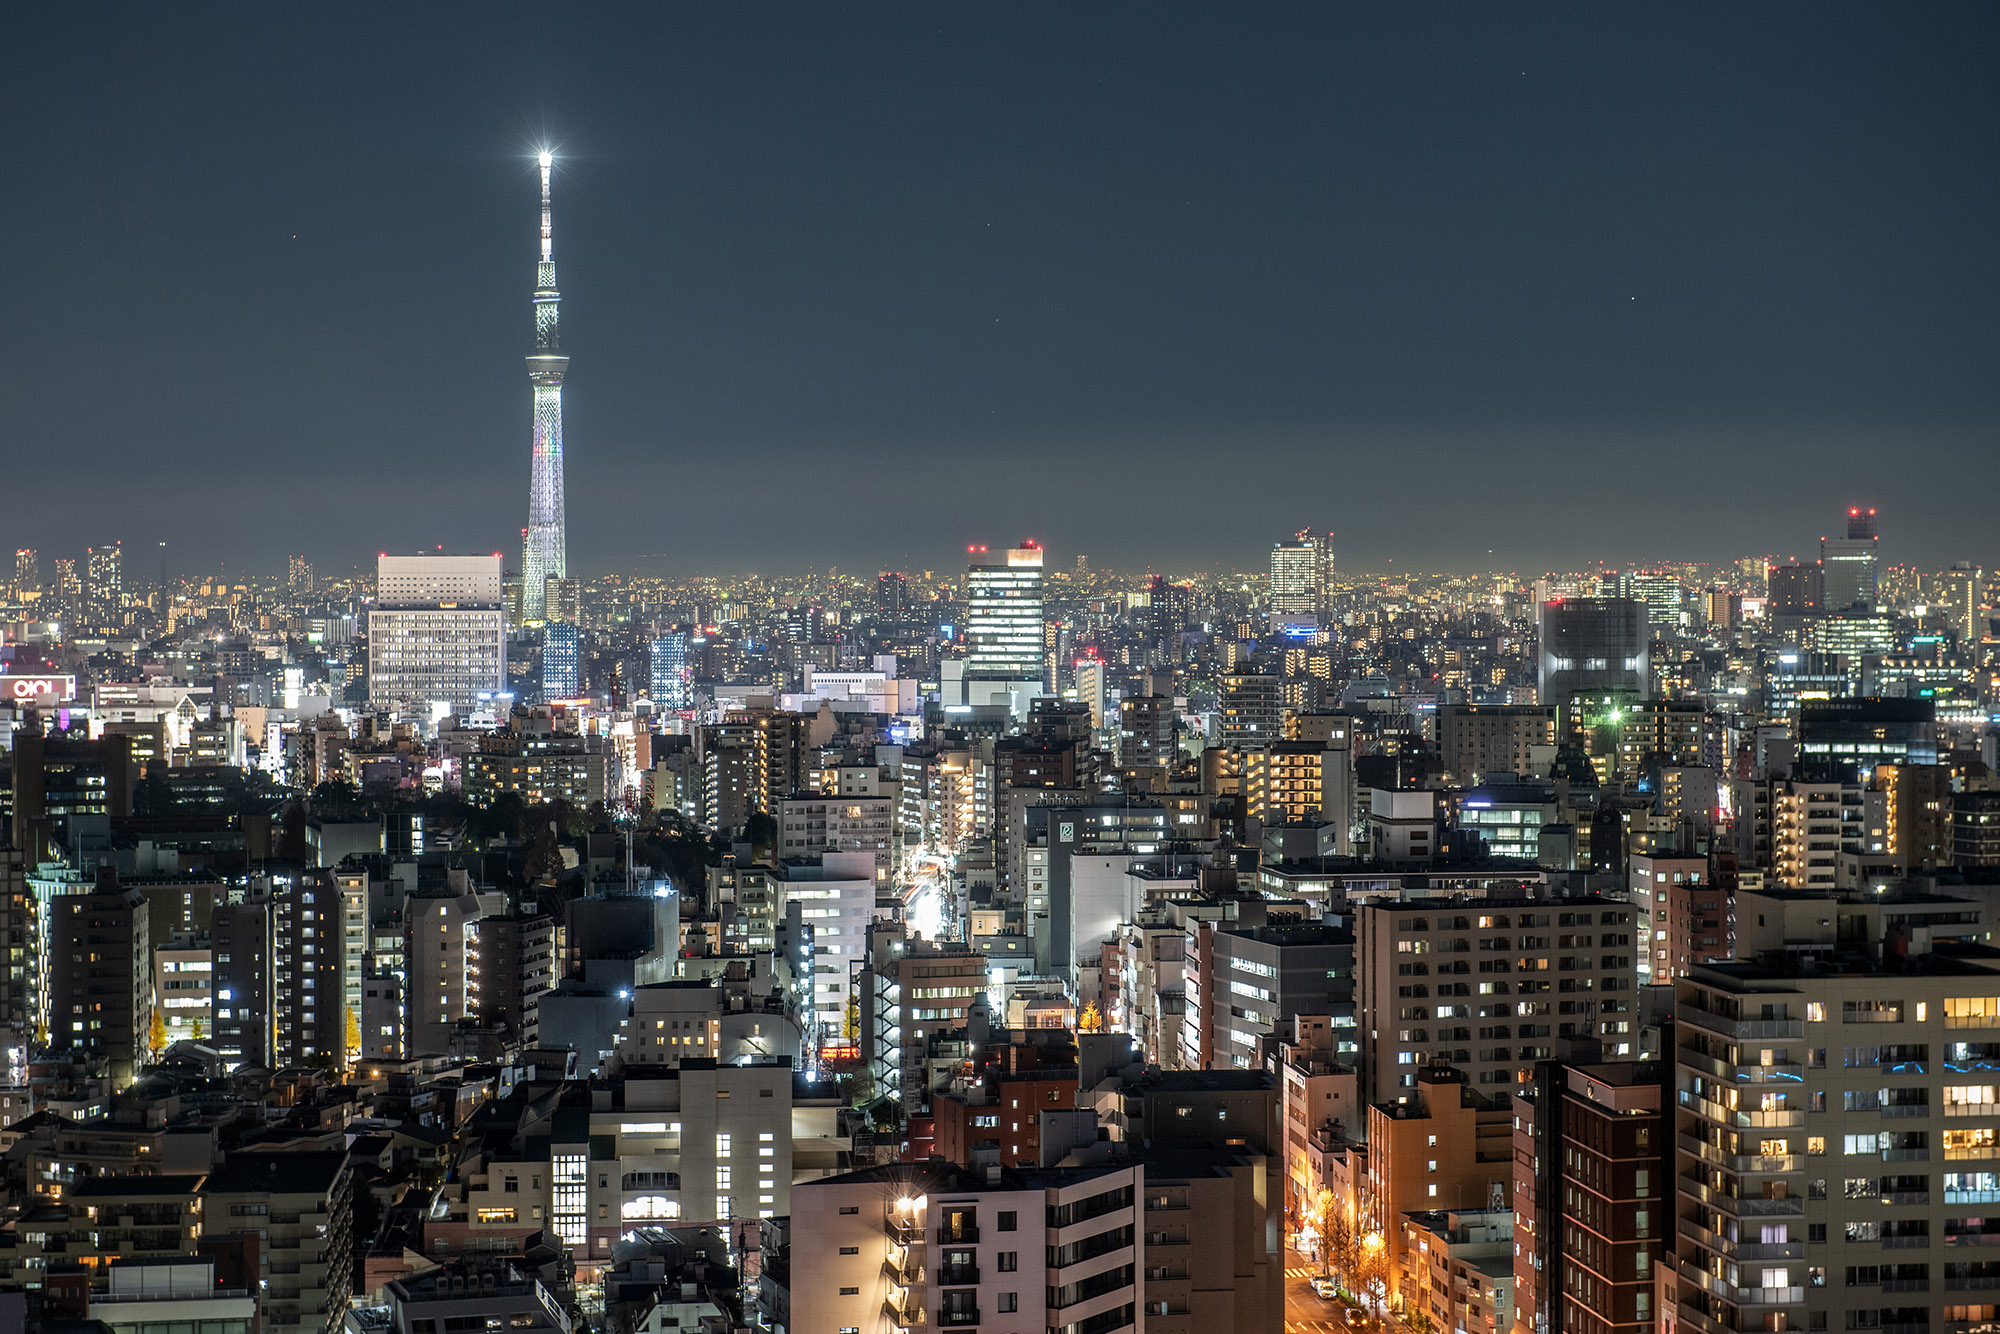 Tokyo Skytree is pictured after dusk on December 23, in Tokyo, Japan. 